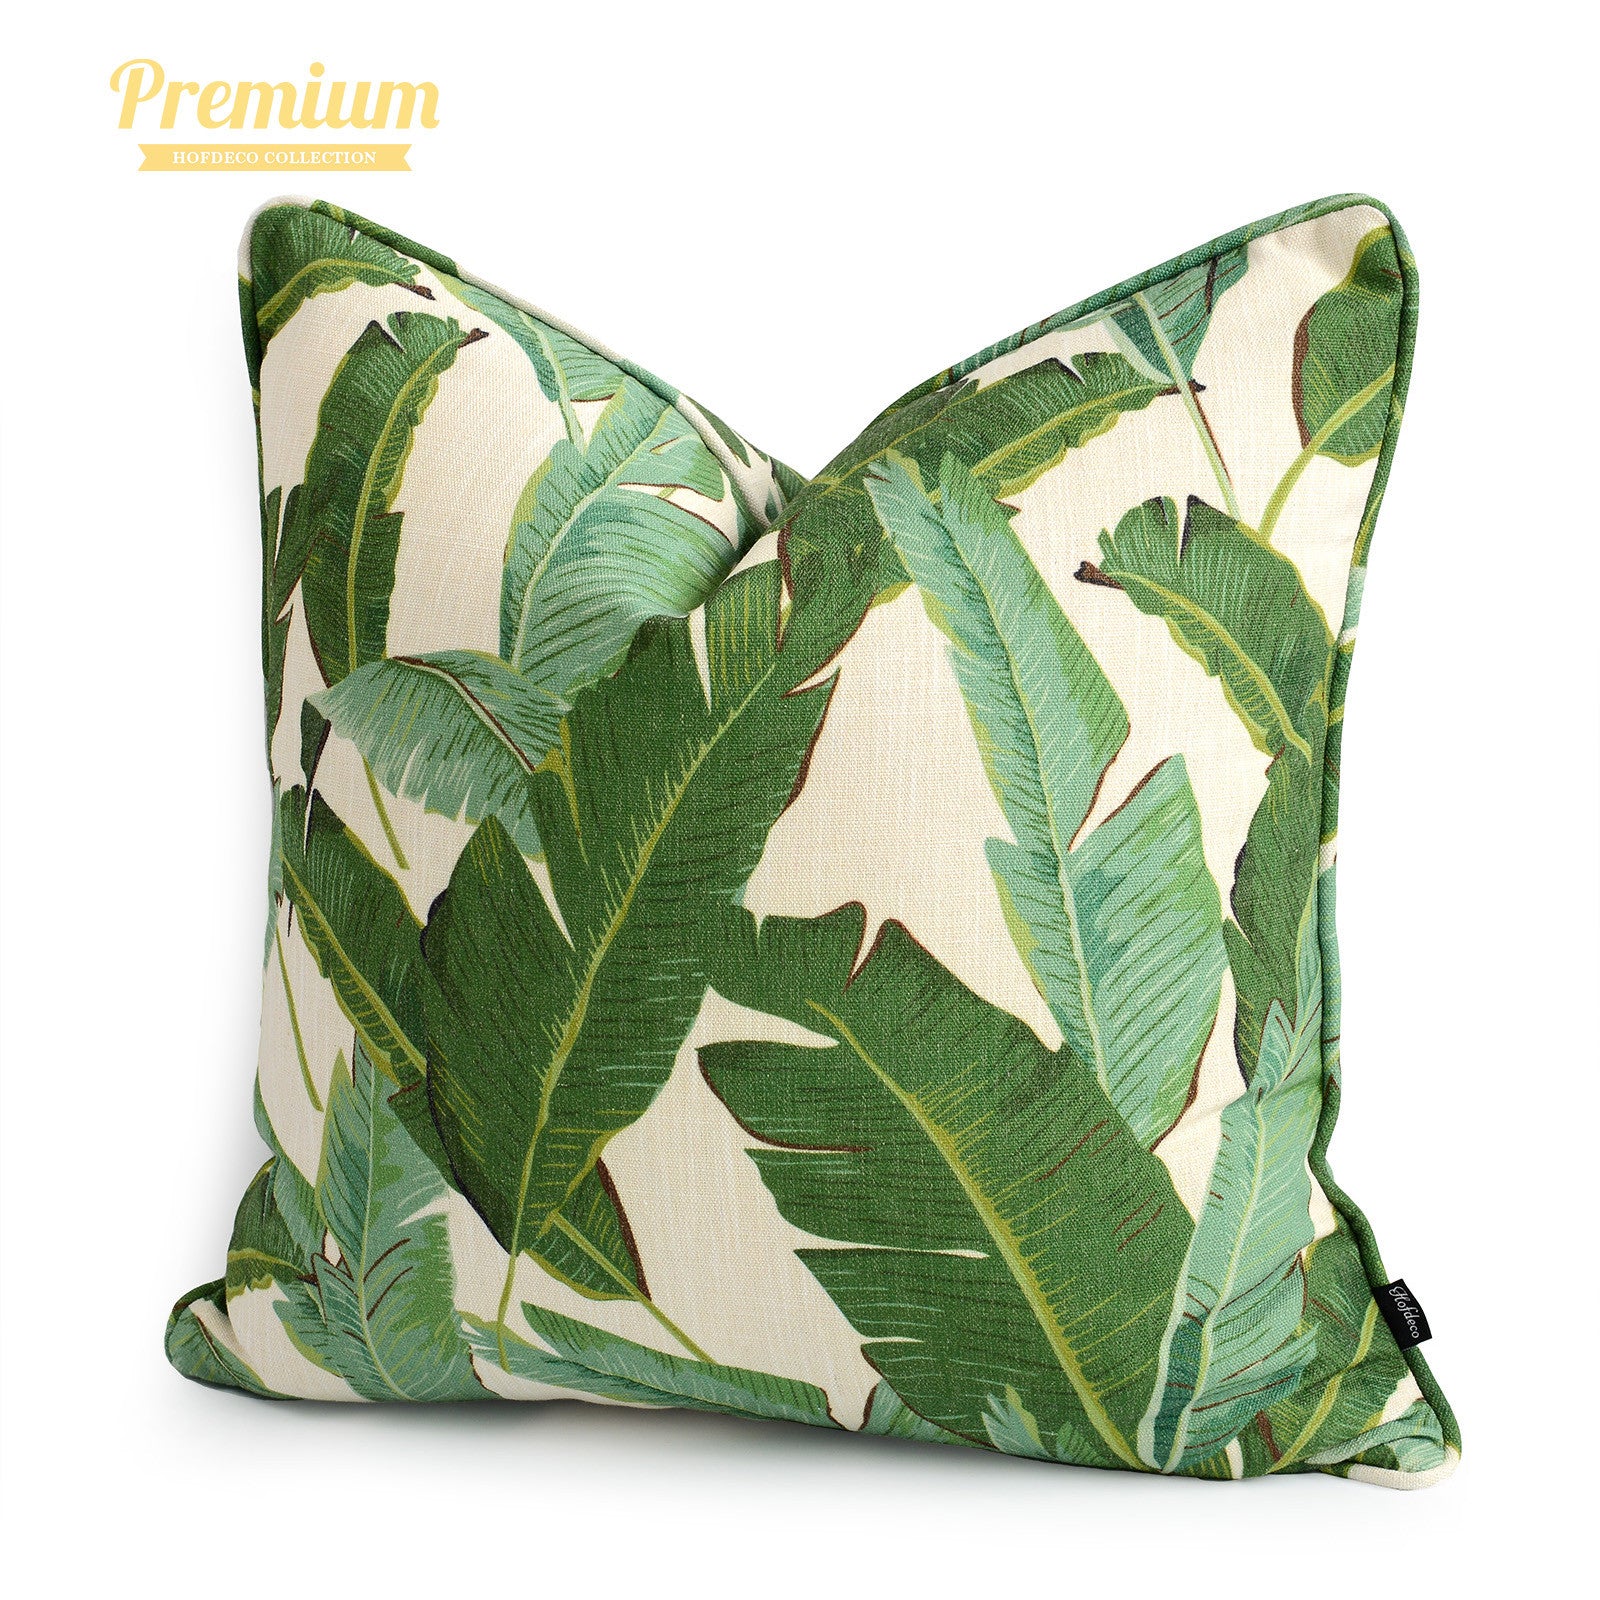 Tropical Banana Leaf Pillow Cover, 20"x20"